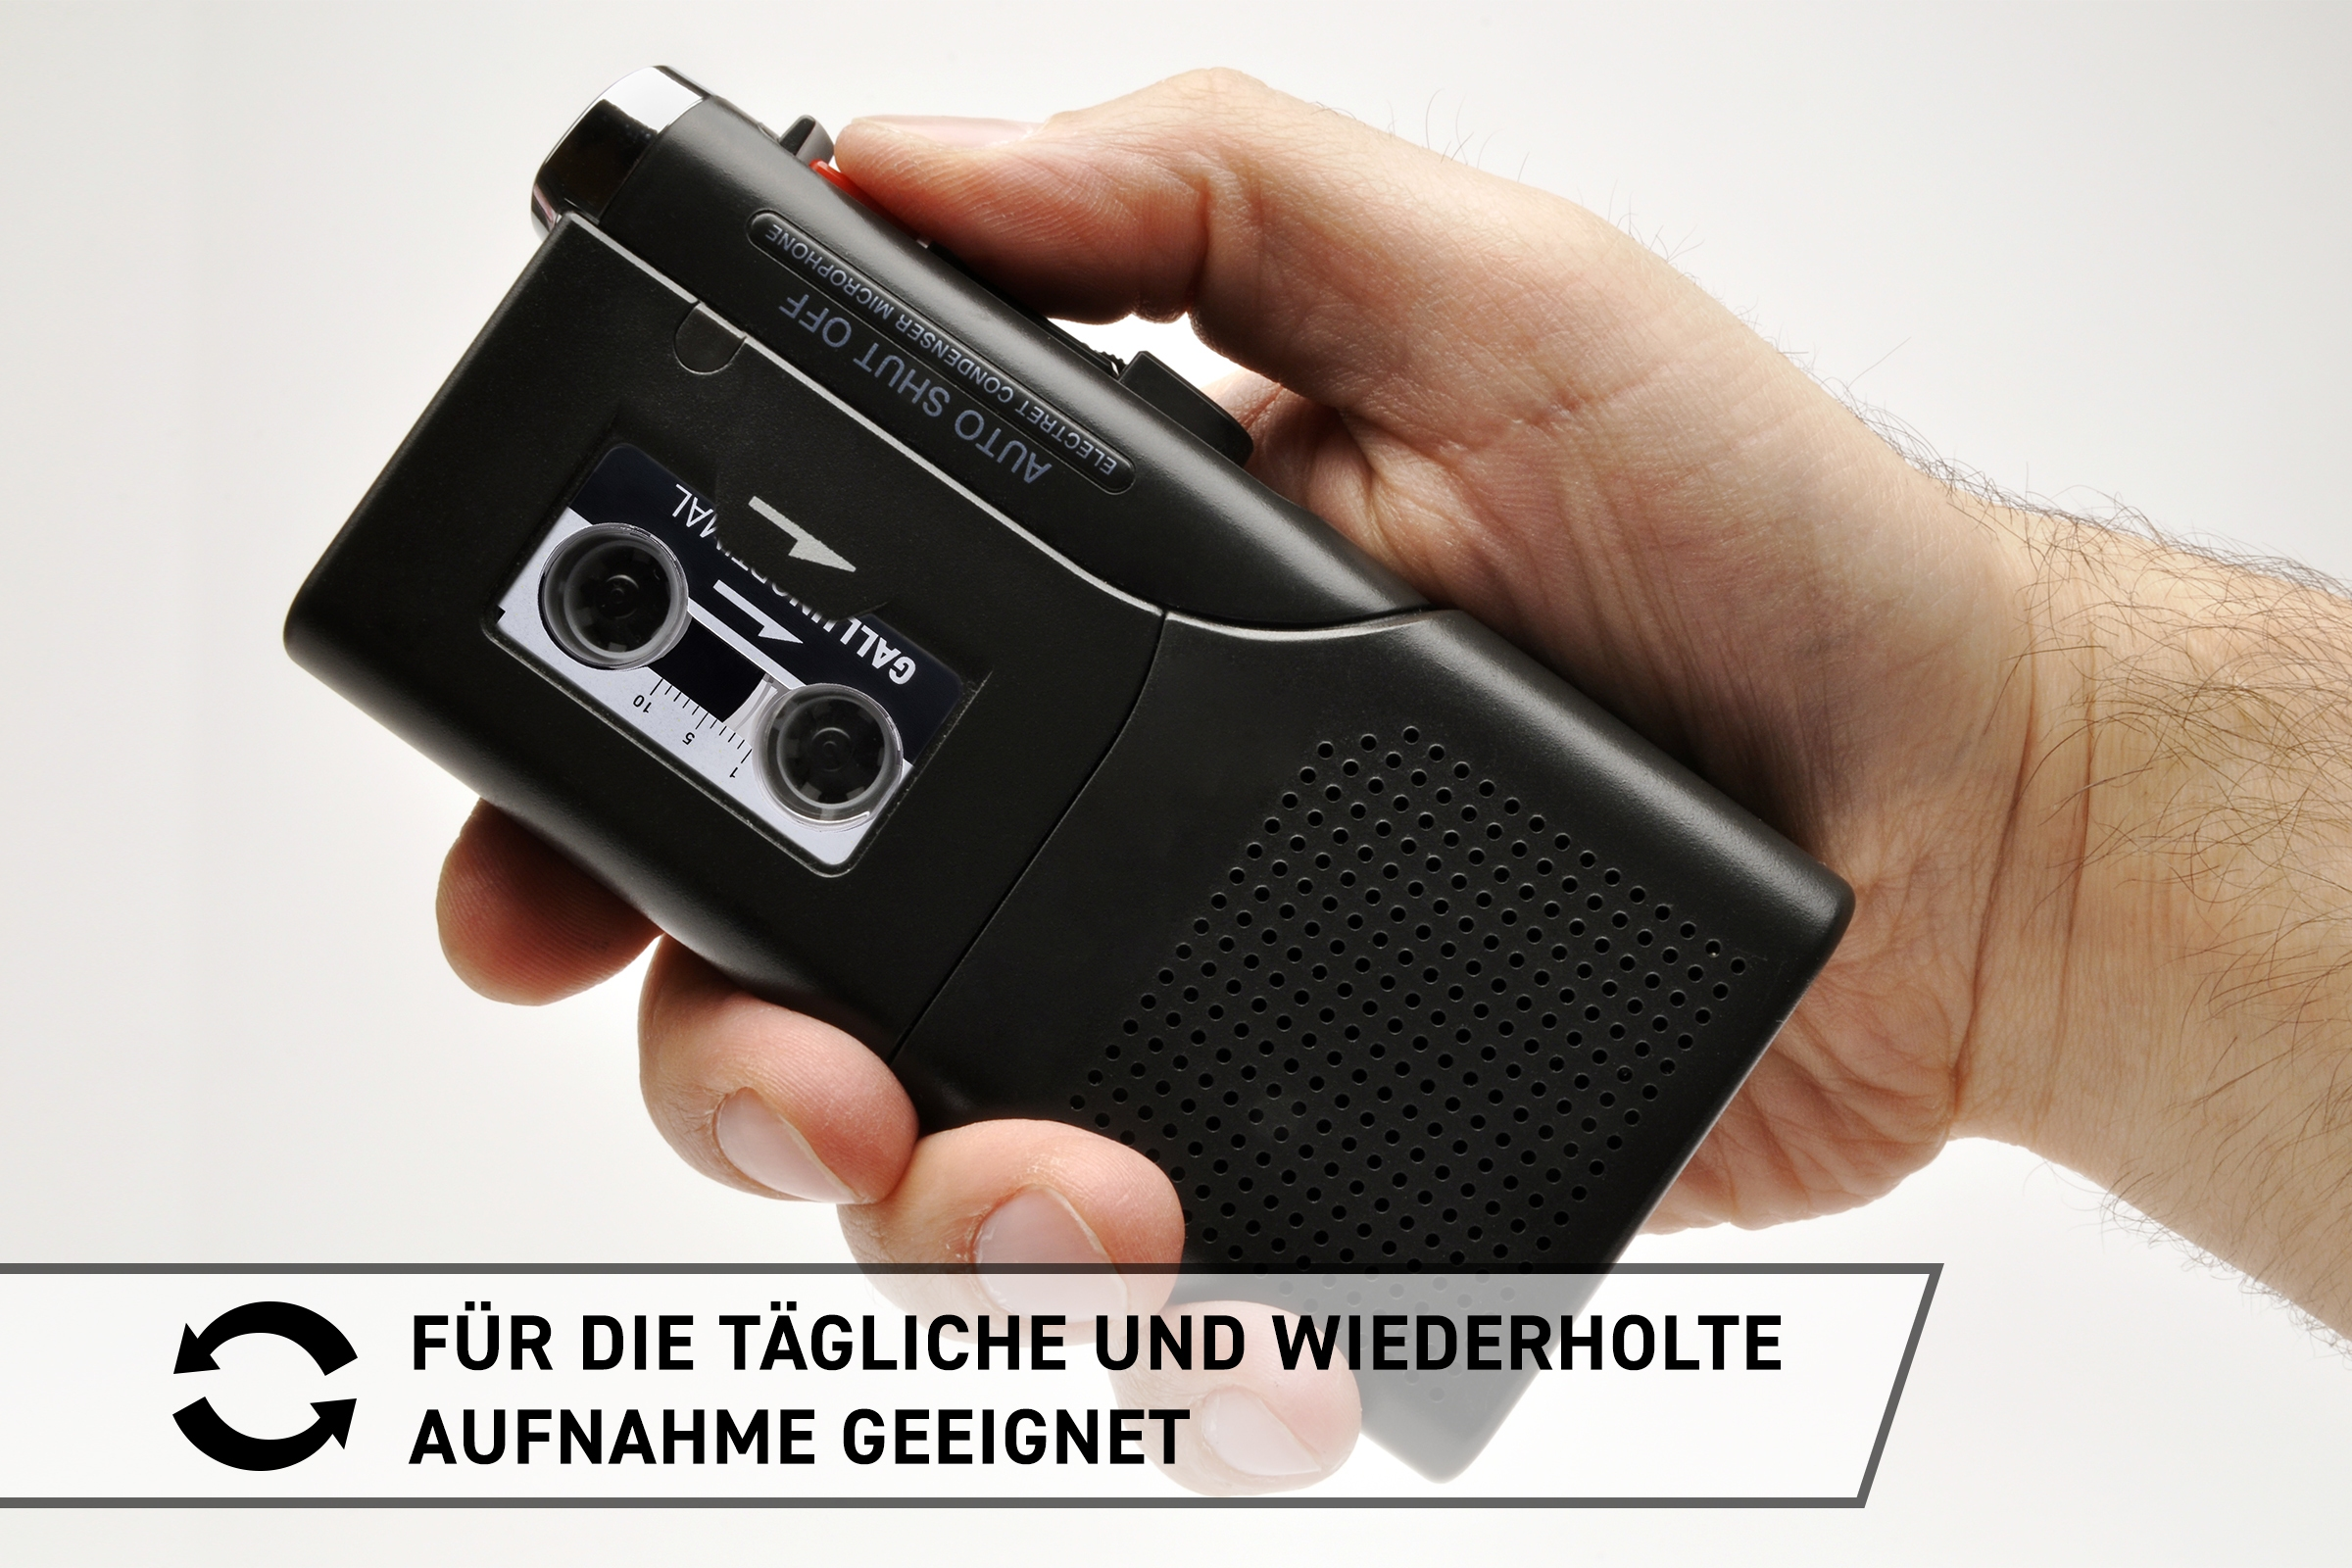 GALLUNOPTIMAL Type min. Microkassette schwarz/weiß 3er-Pack 60 Audiokassette, MC60